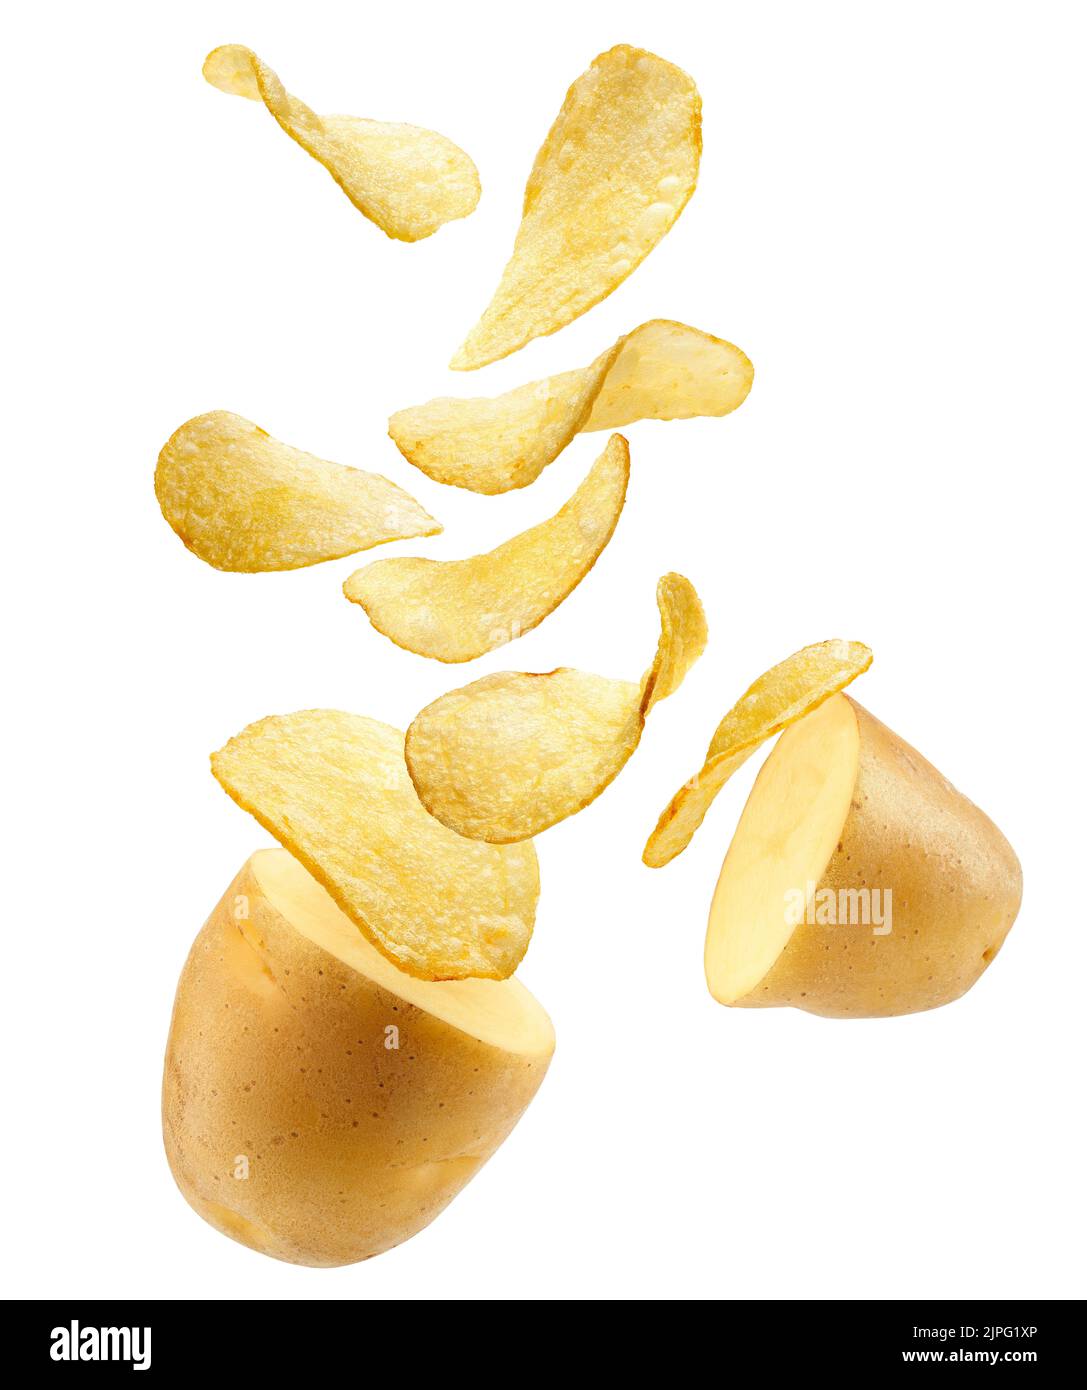 Potato and cripsy potato chips isolated on white background Stock Photo